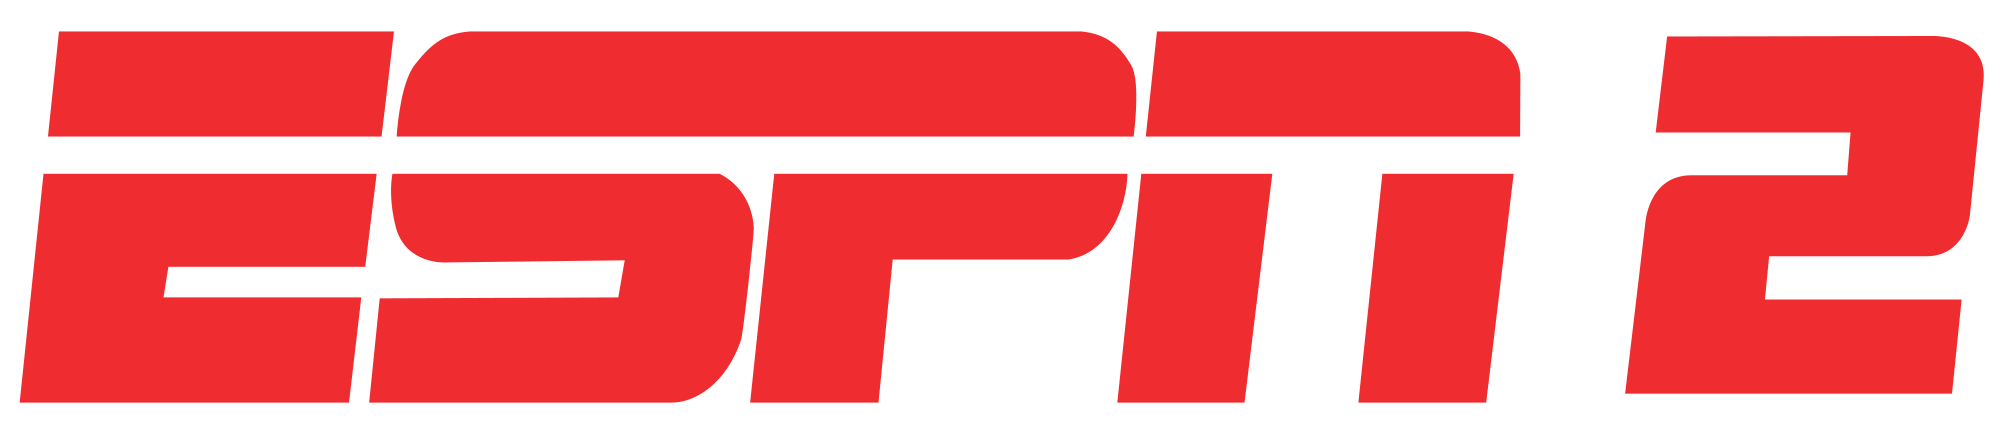 ESPN2 Logo - Espn2 Logos